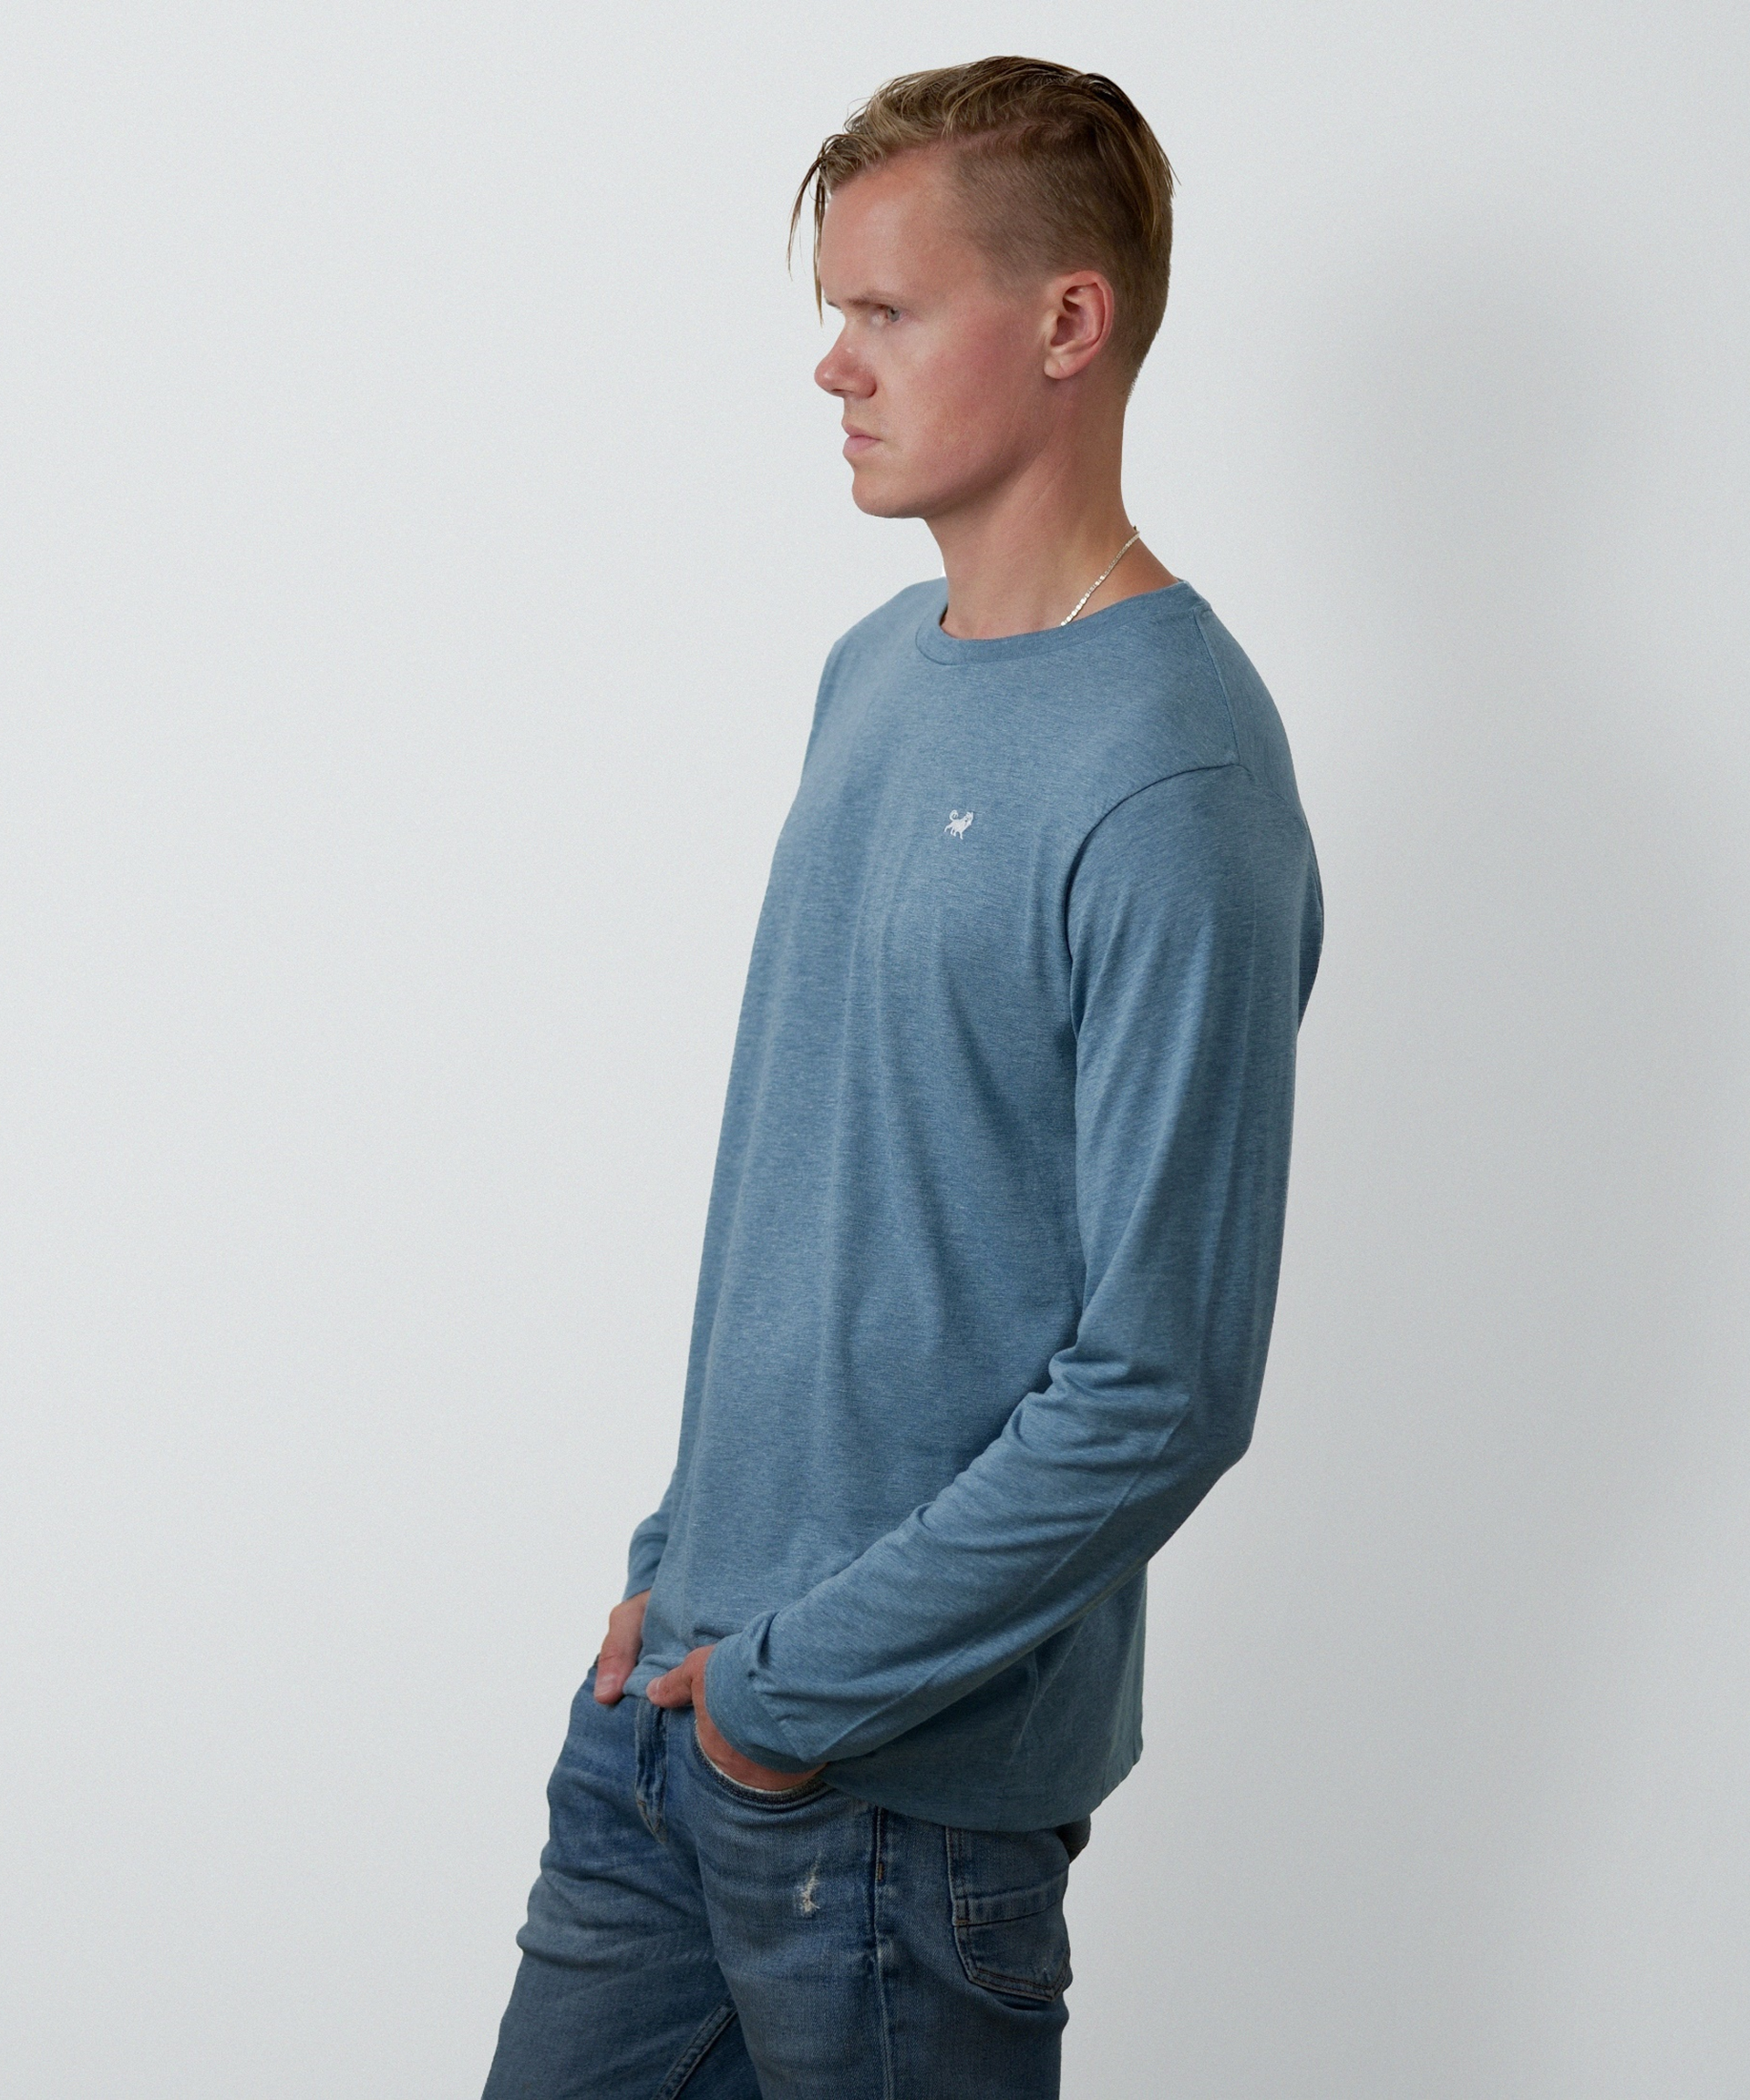 Signature Long Sleeve T-Shirt for Men (Denim Triblend)